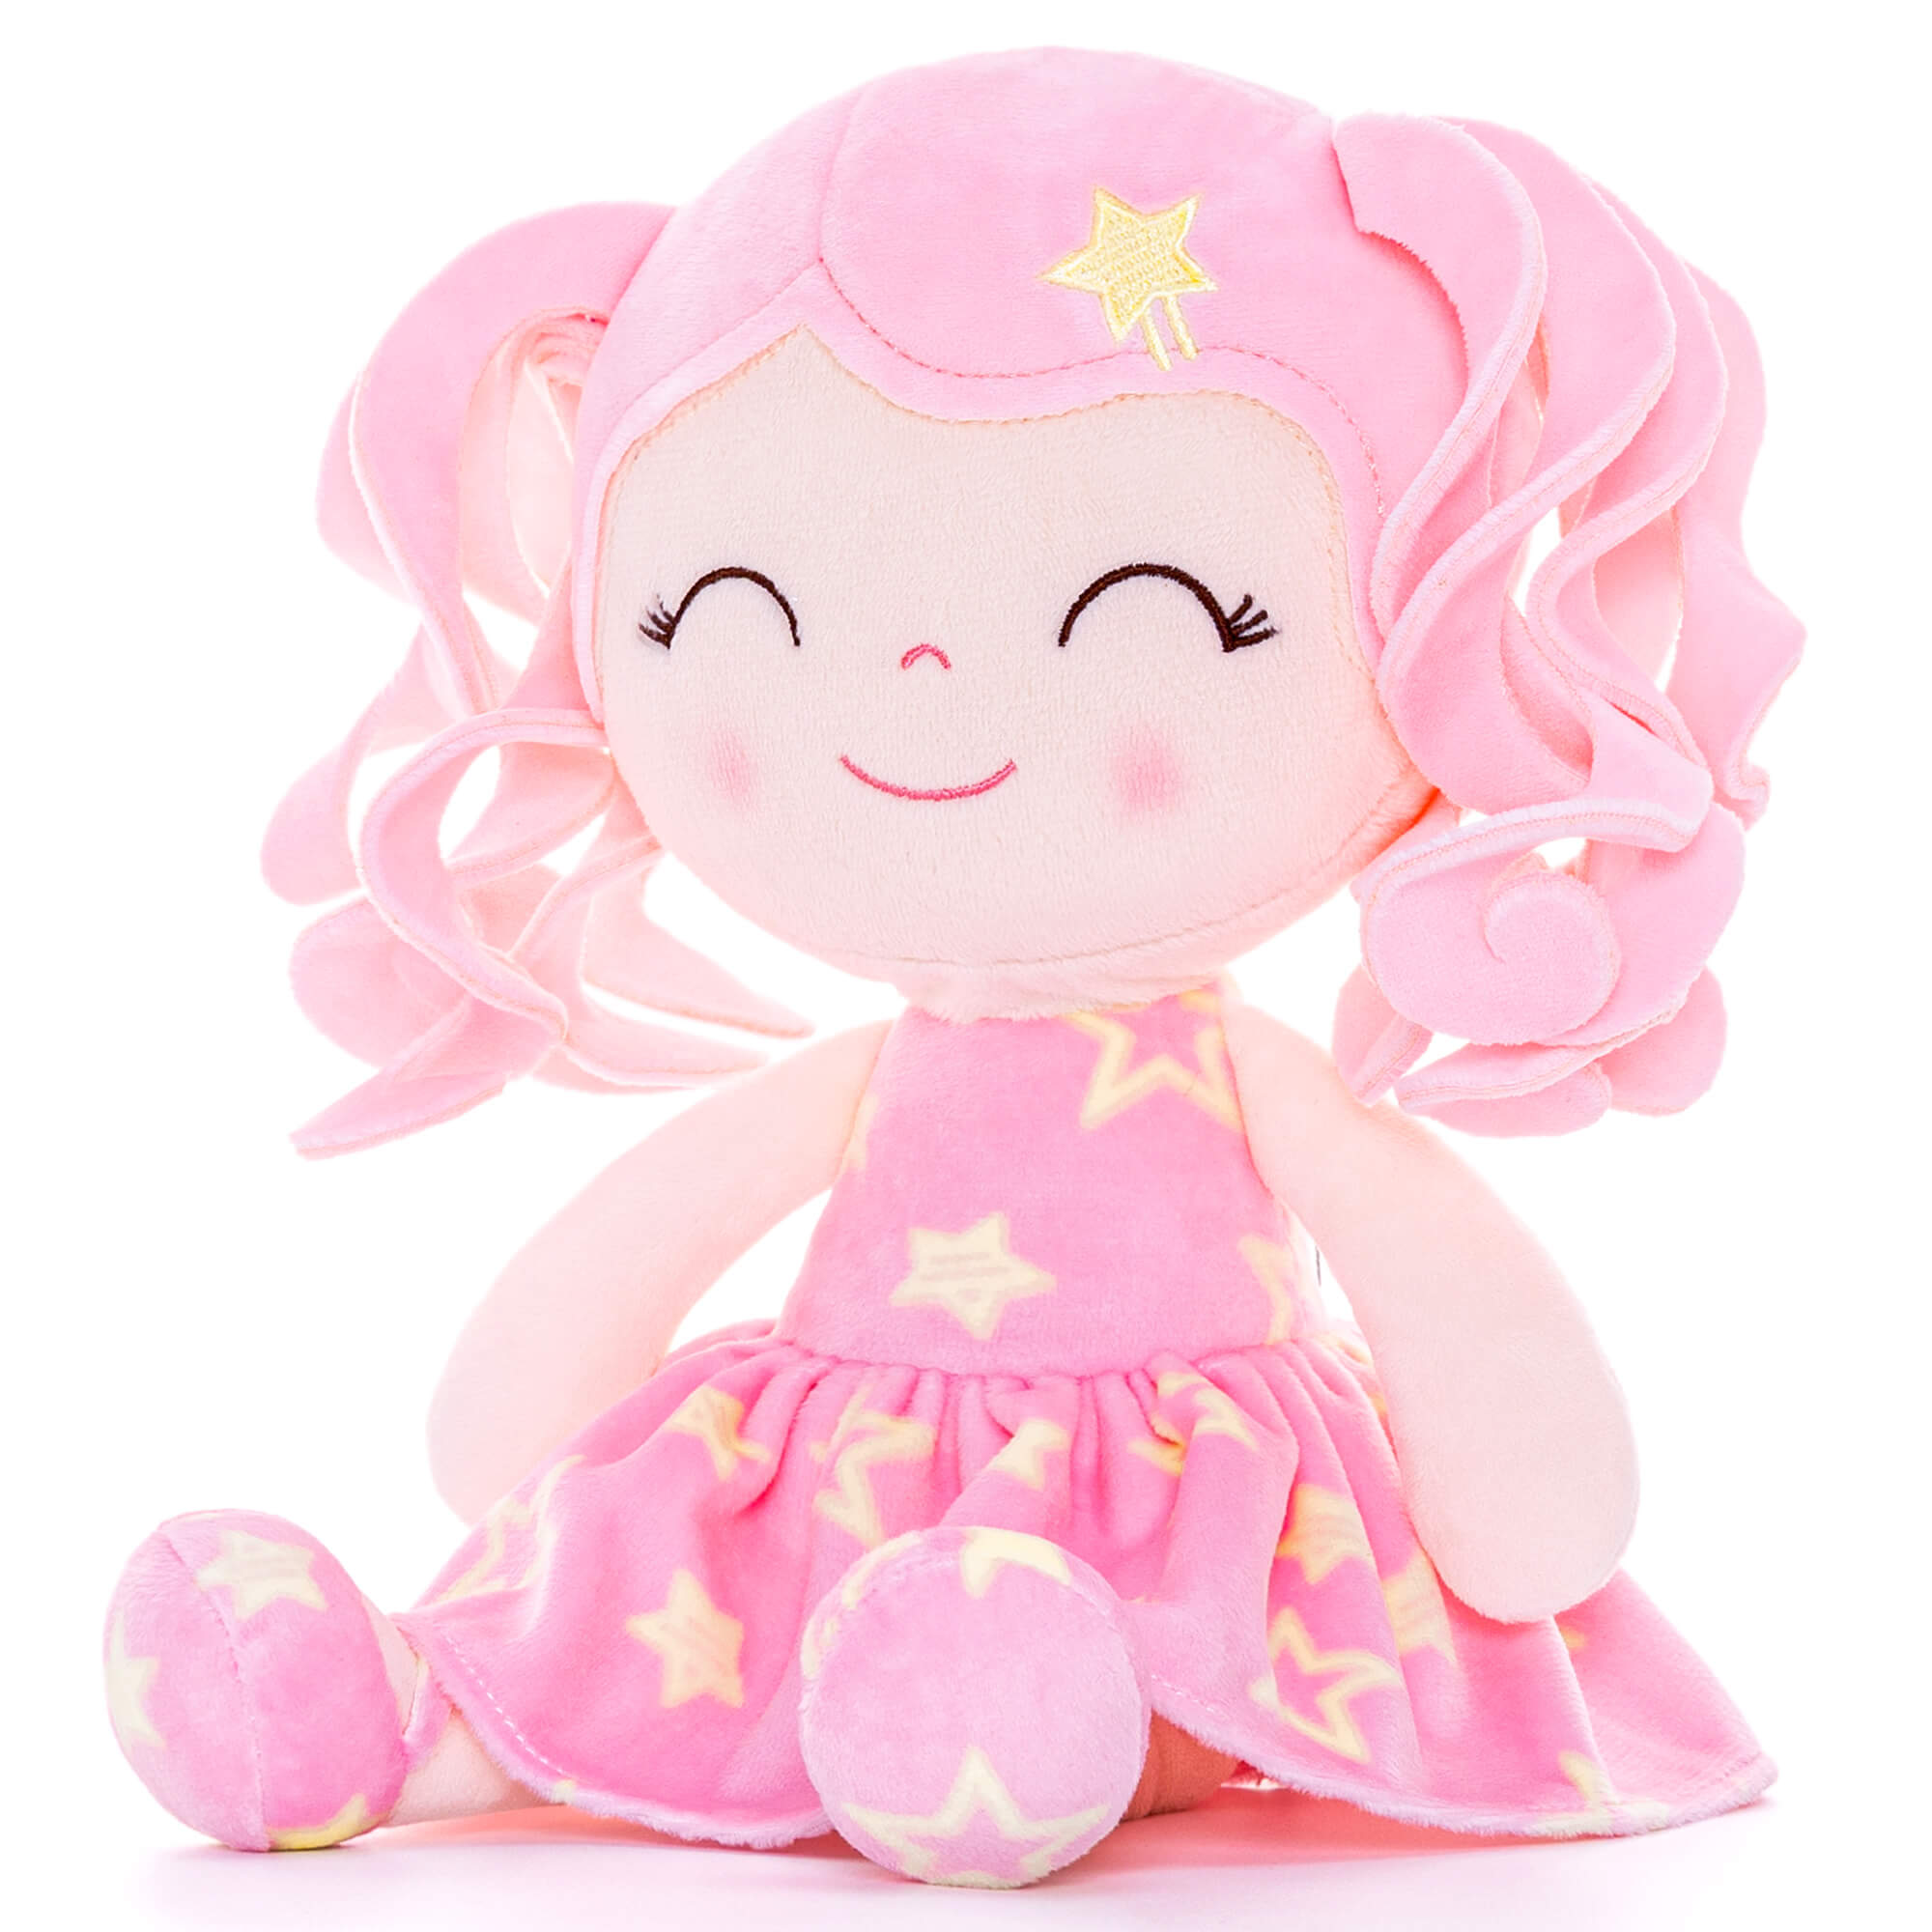 Gloveleya 12-inch Curly Hair Baby Star Dress Doll Black Pink